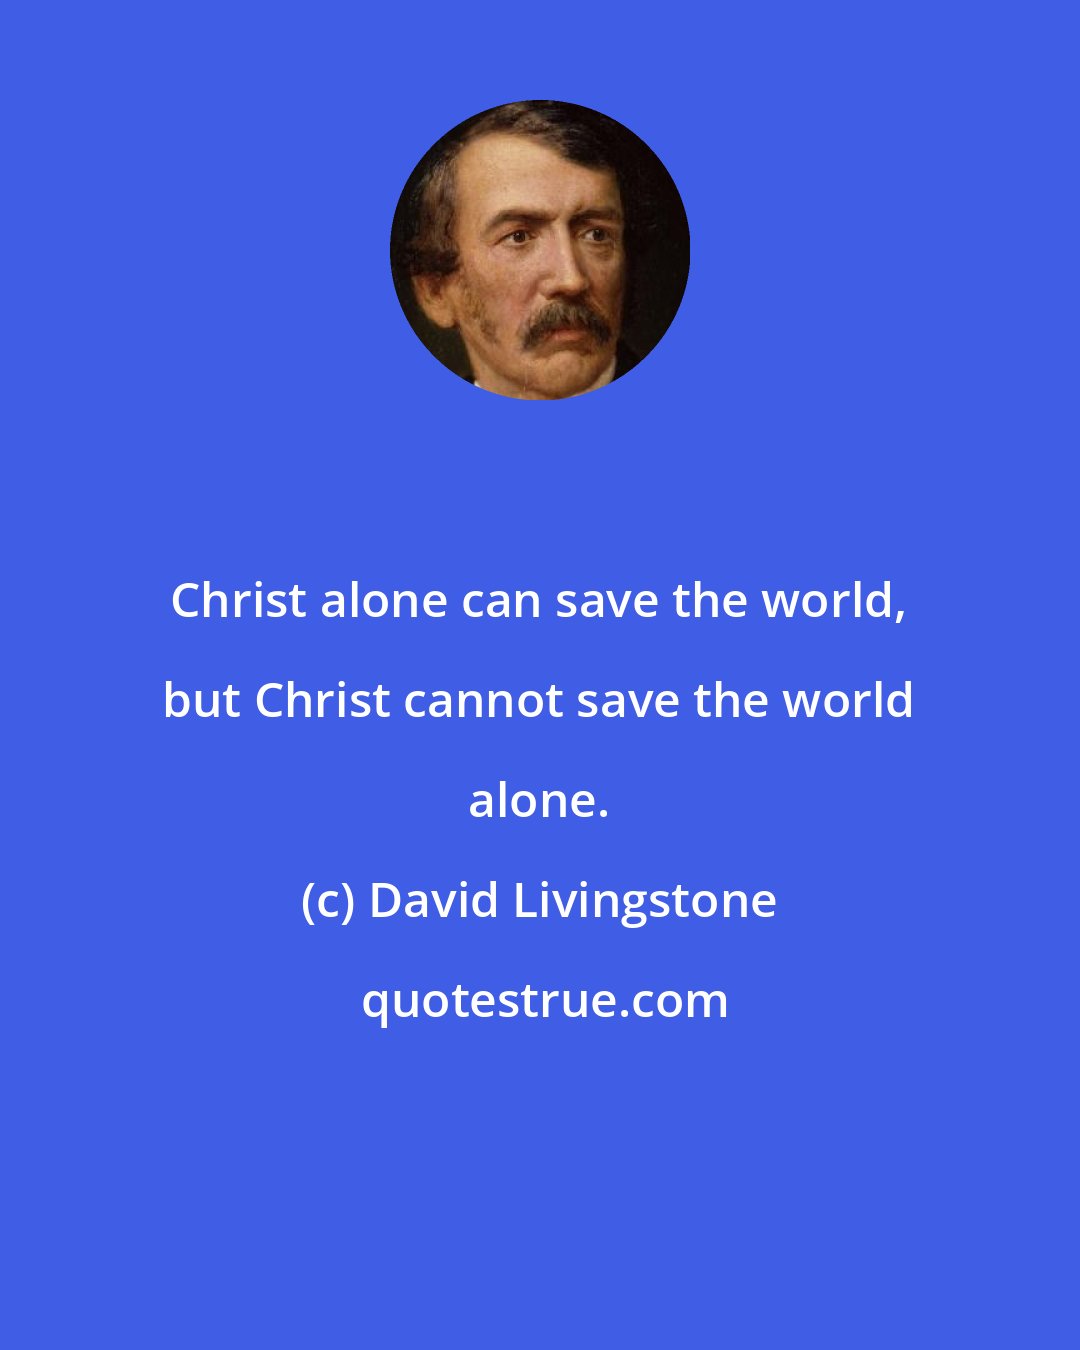 David Livingstone: Christ alone can save the world, but Christ cannot save the world alone.